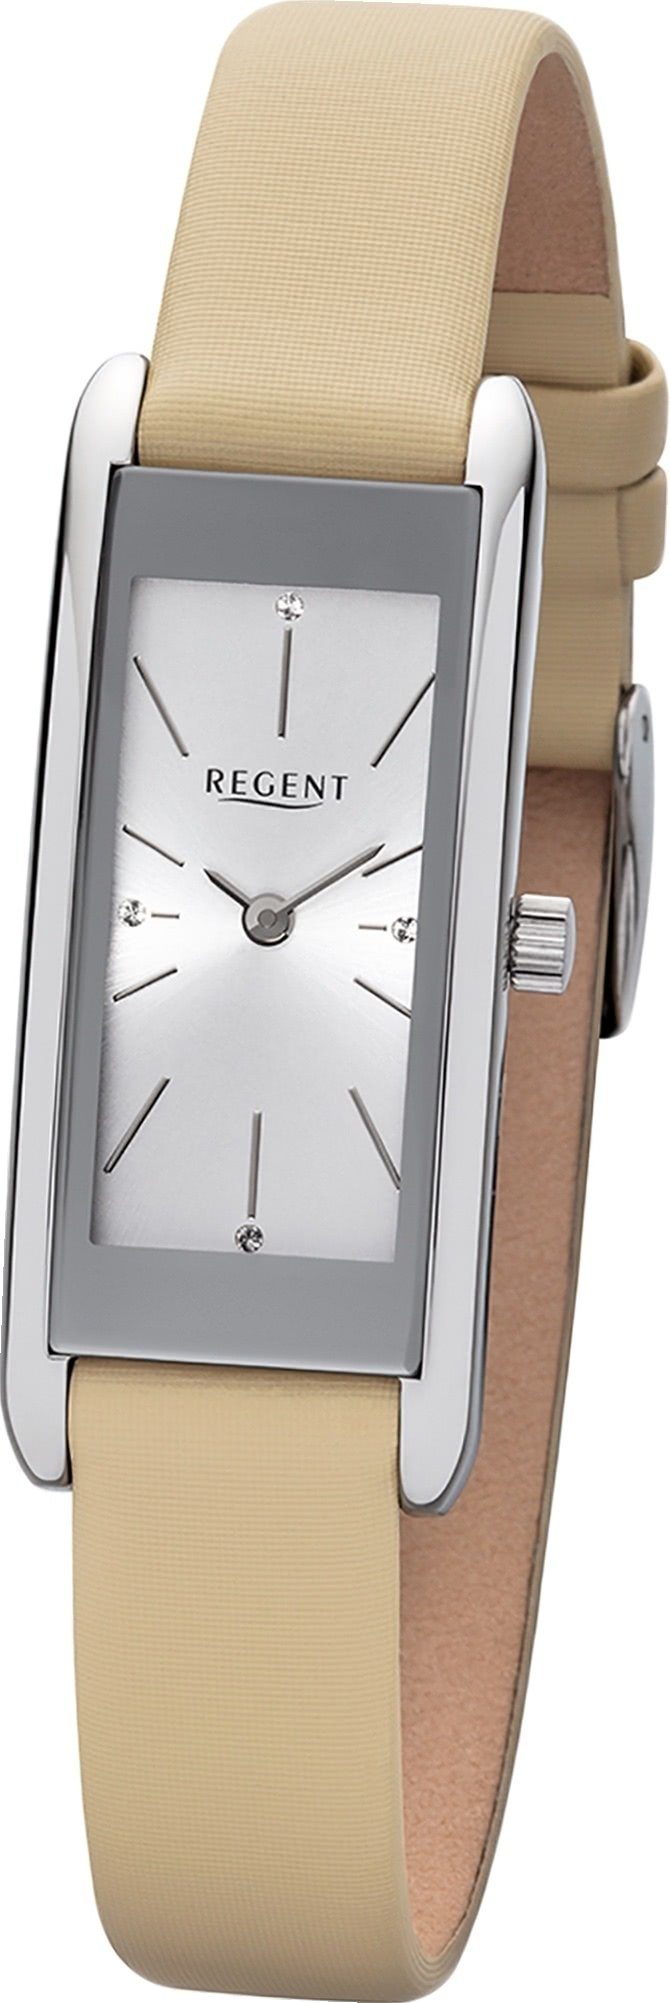 Regent Quarzuhr Regent Leder Damen Uhr BA-458 Analog, (Analoguhr), Damenuhr  Lederarmband beige, braun, eckiges Gehäuse, groß (ca. 41mm)